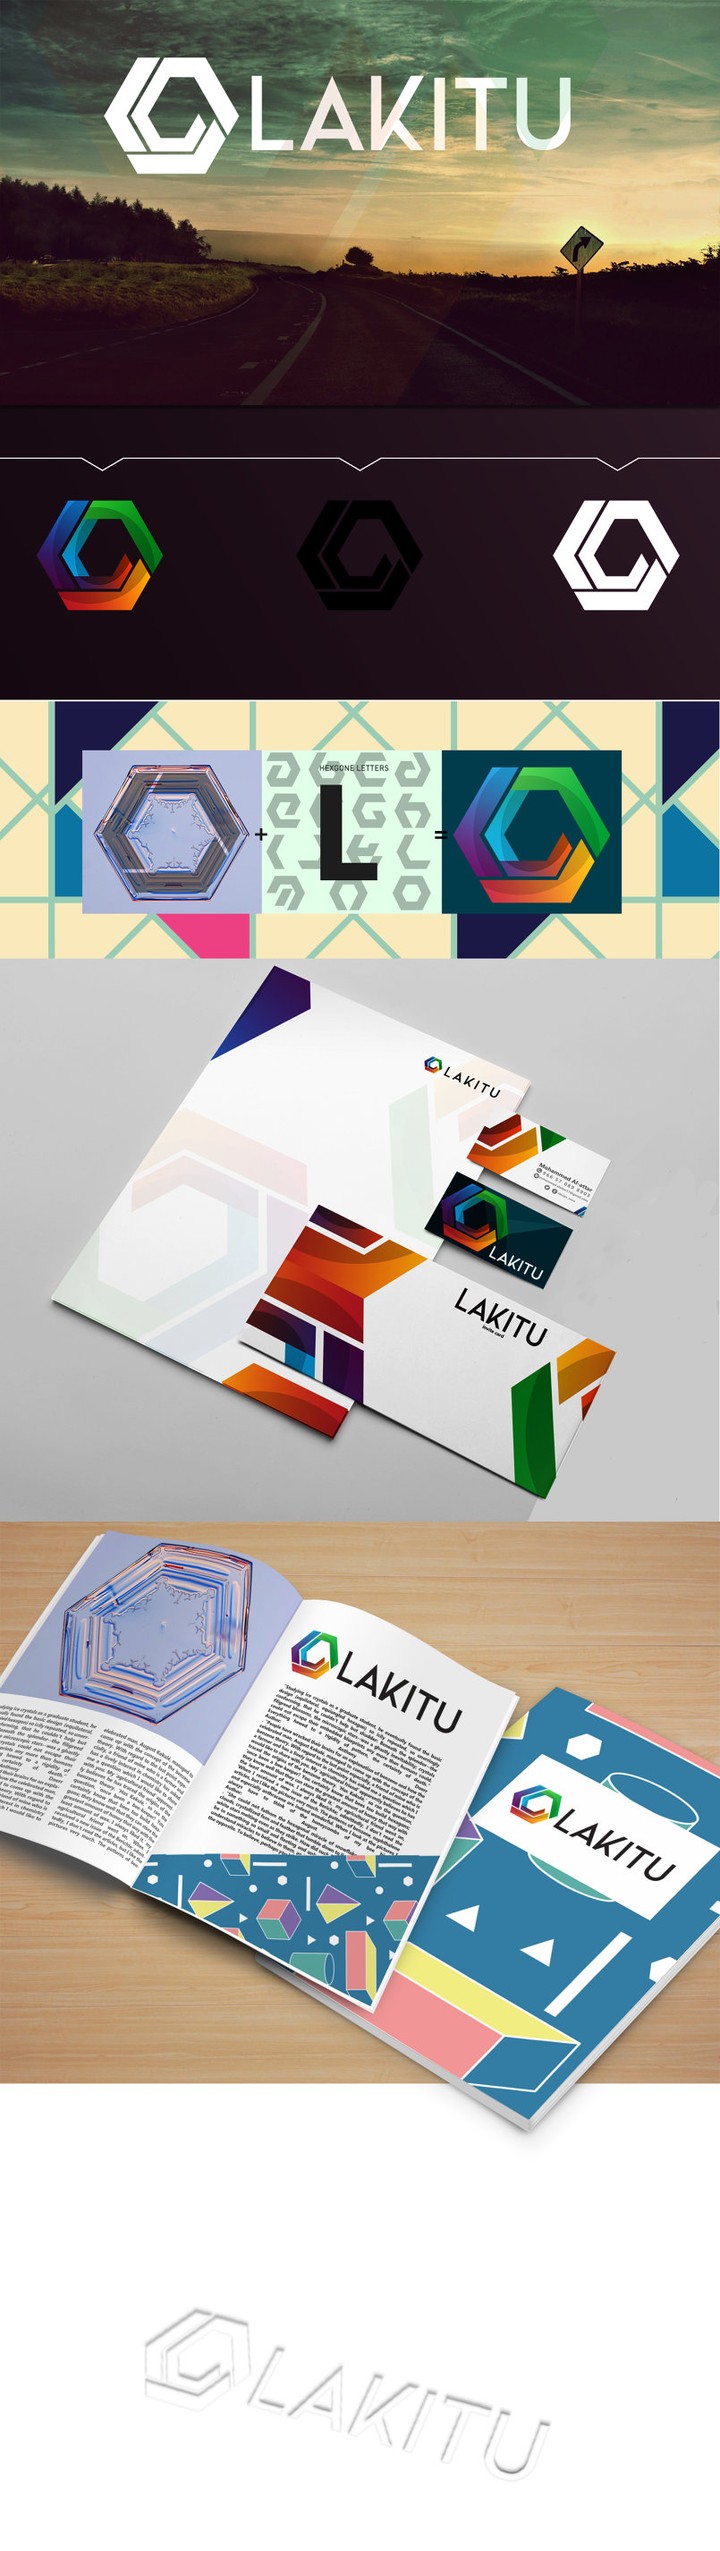 LAKITU brand identity | تصميم هوية لوكيتو